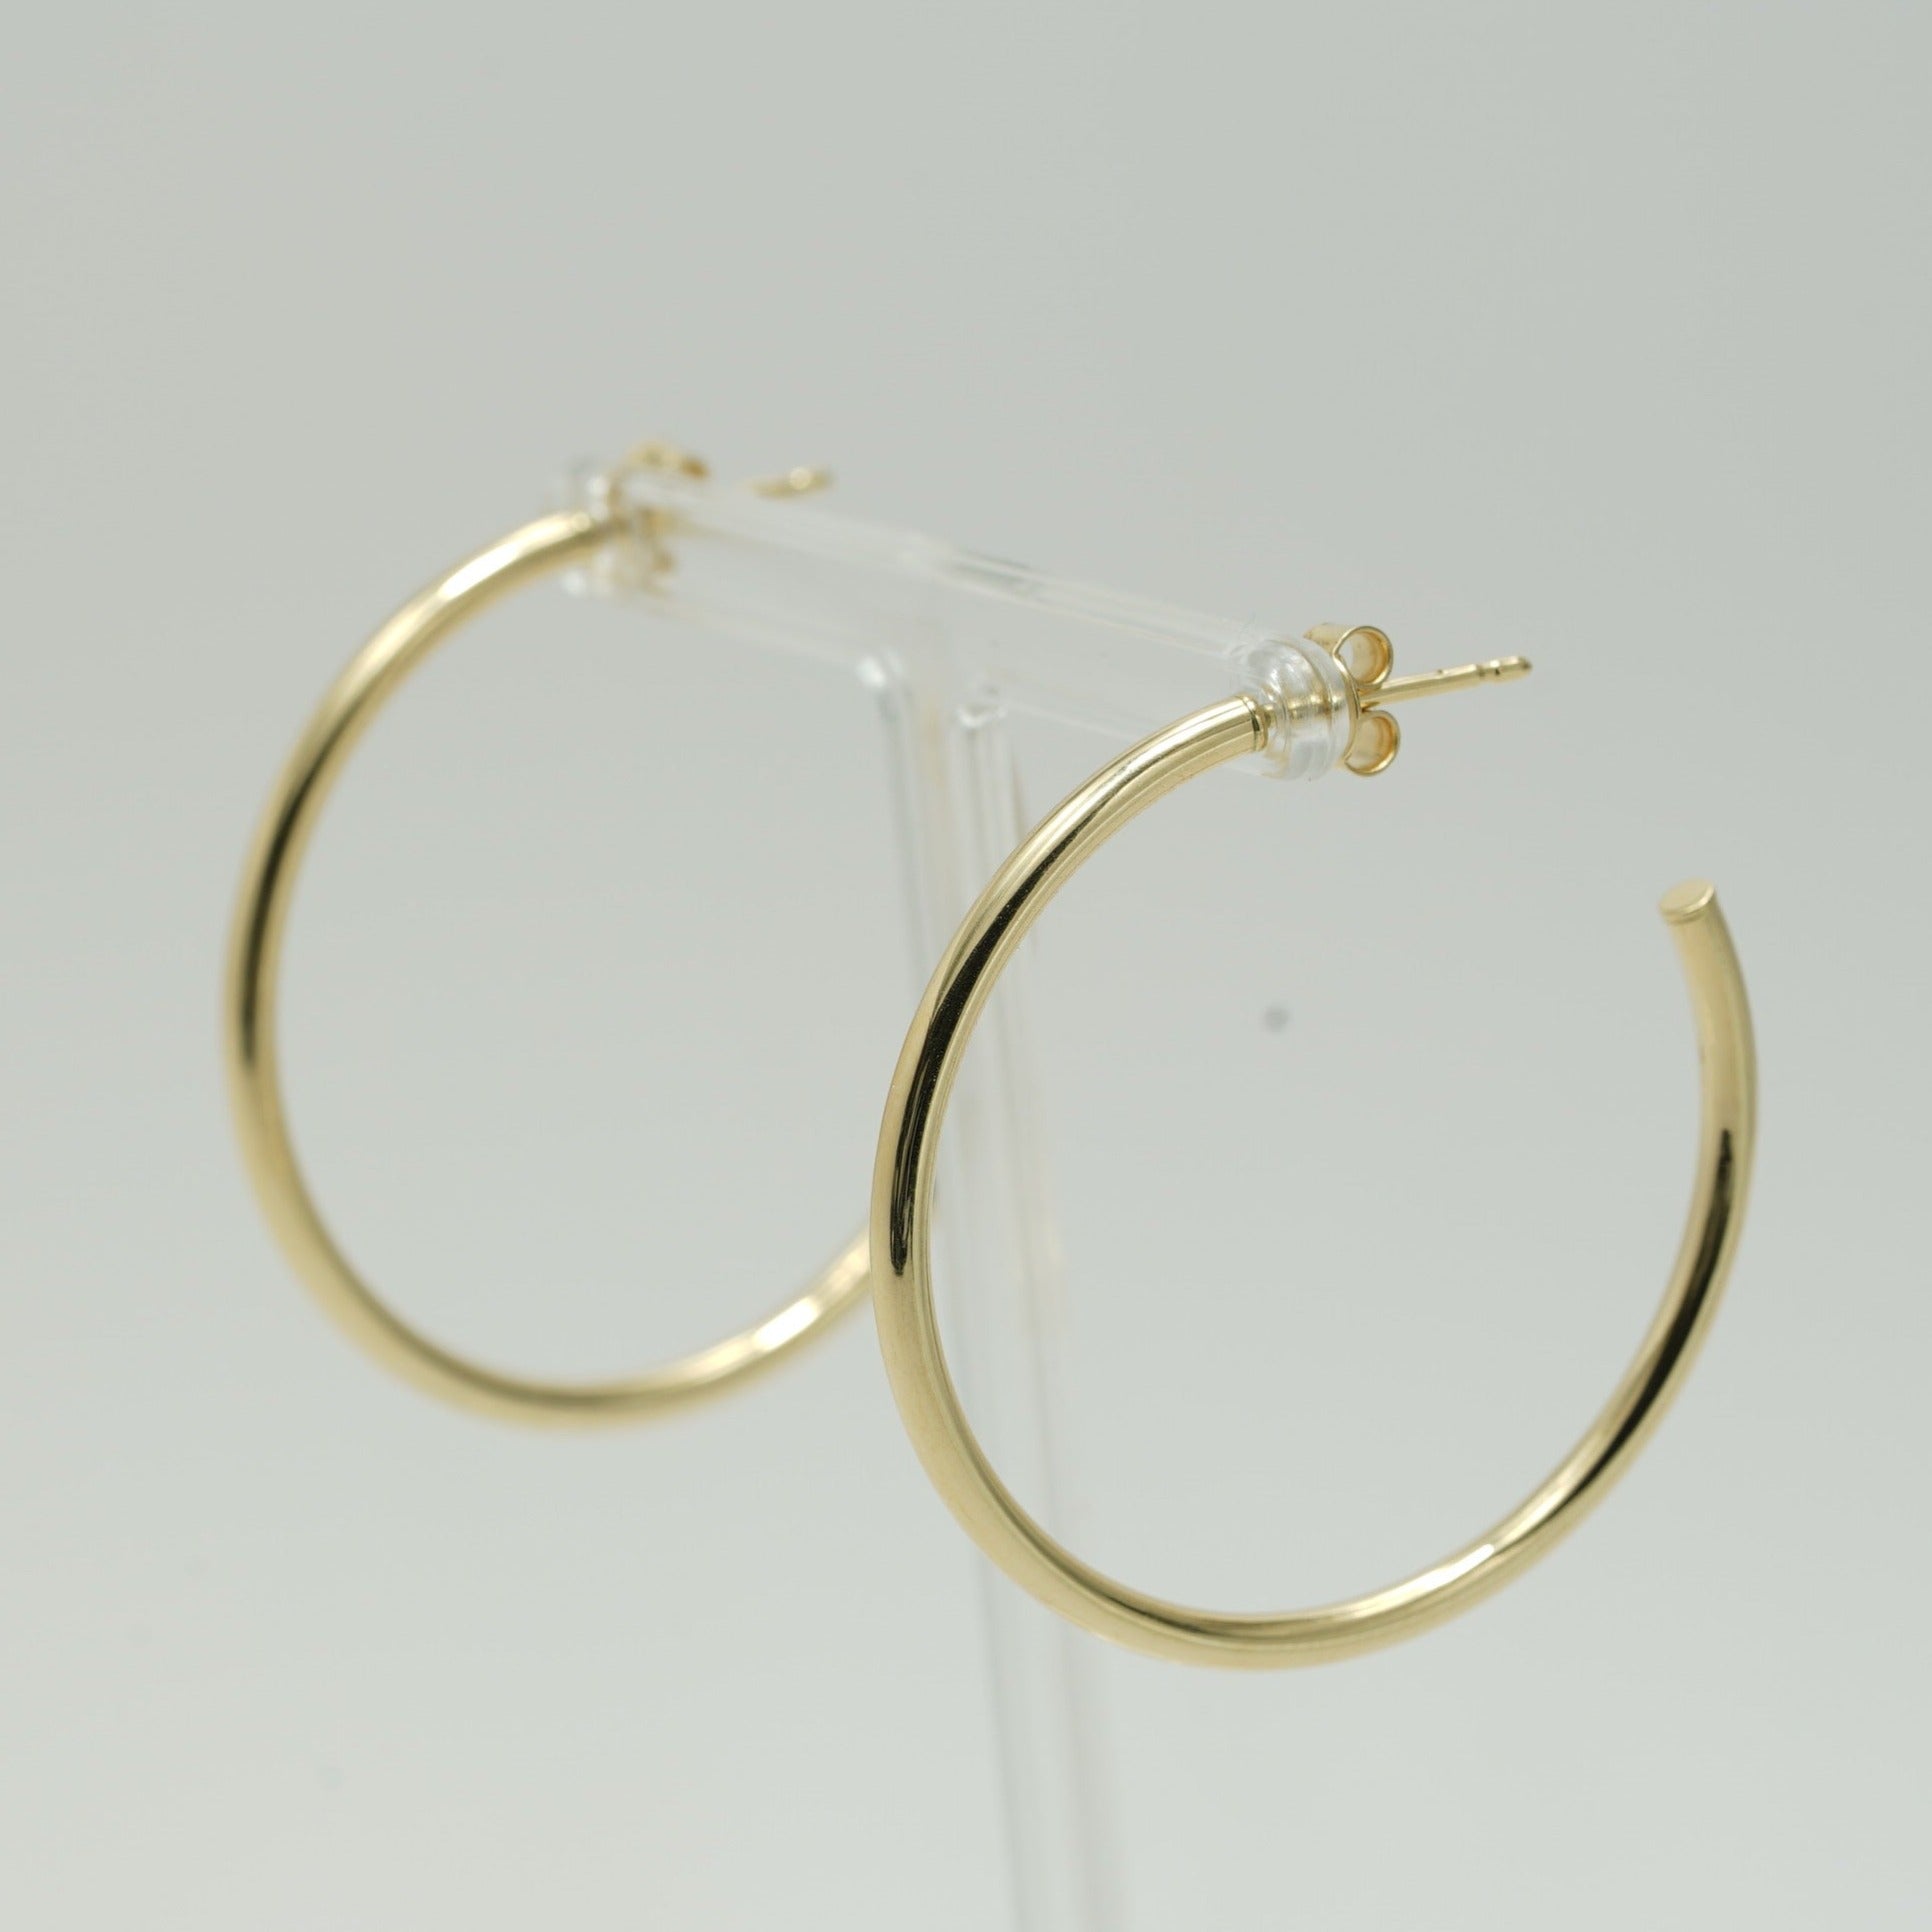 Amazon.com: Quality Gold Earrings